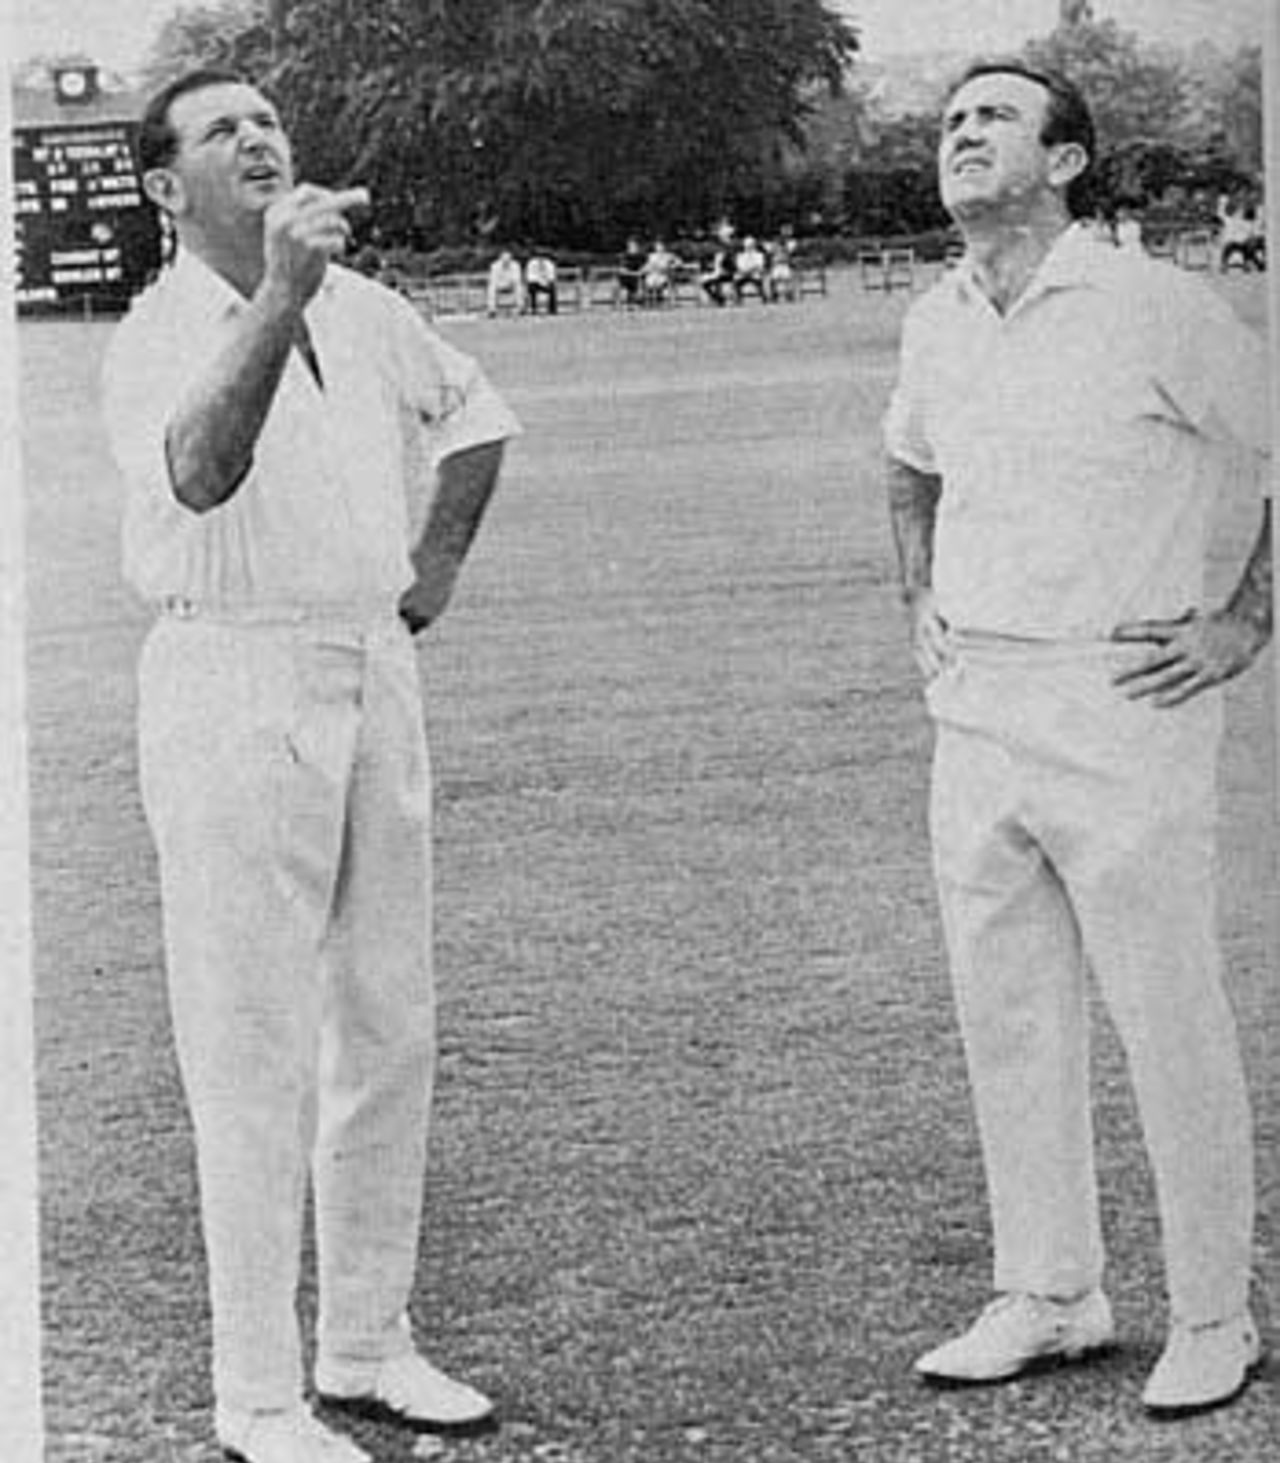 Tom Graveney tosses and Bobby Simpson calls, Wardown Park, Luton, June 15, 1969